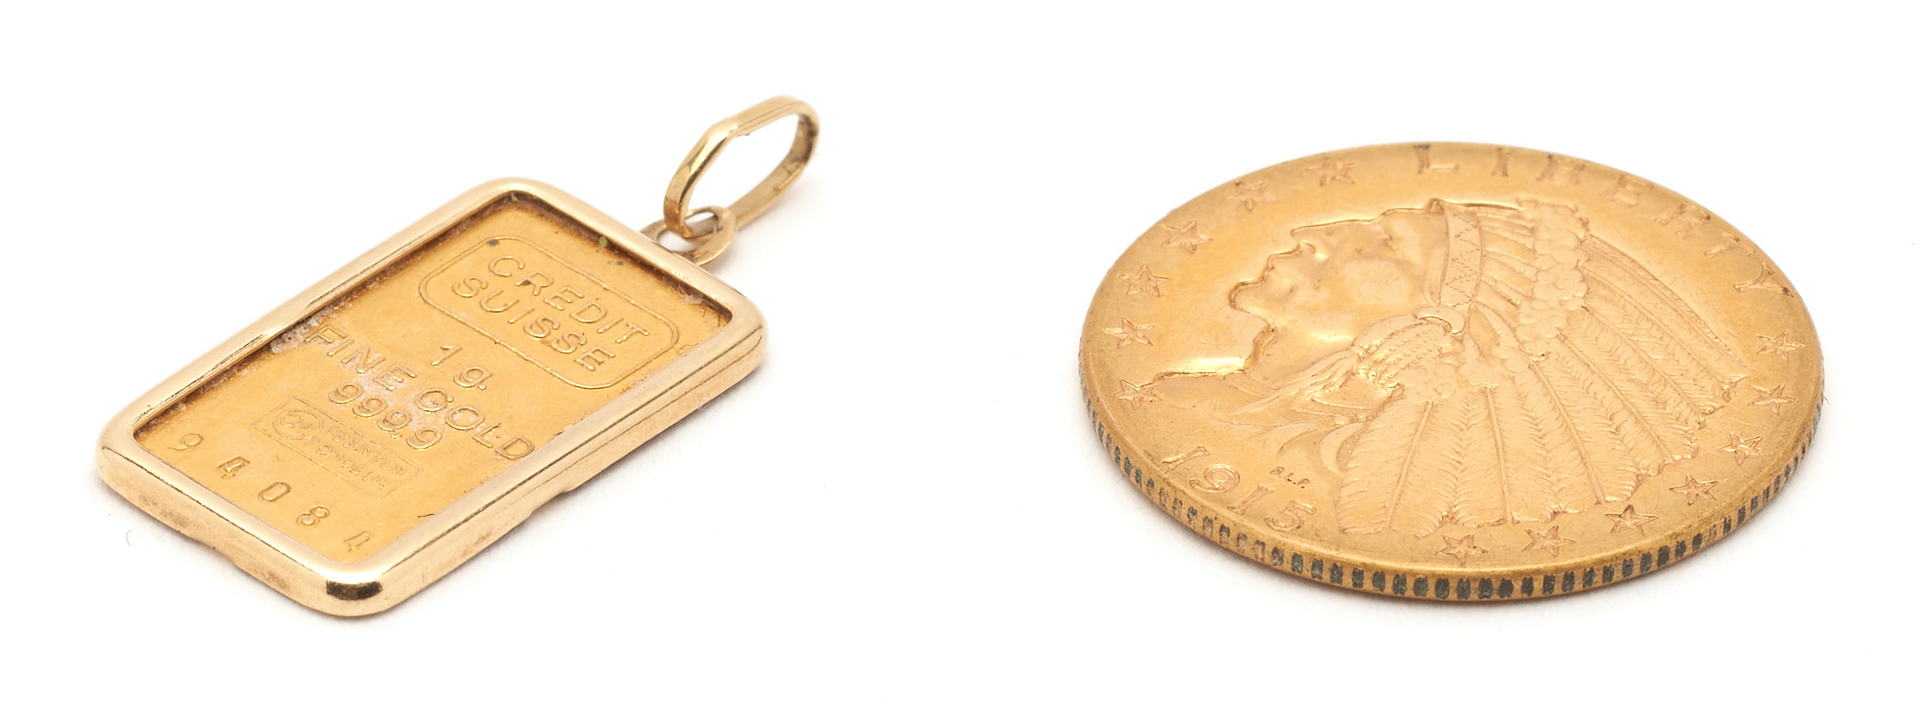 Lot 728: 1915 $2 1/2 Indian Head Coin & 1 Gram Credit Swisse Bar, 2 items